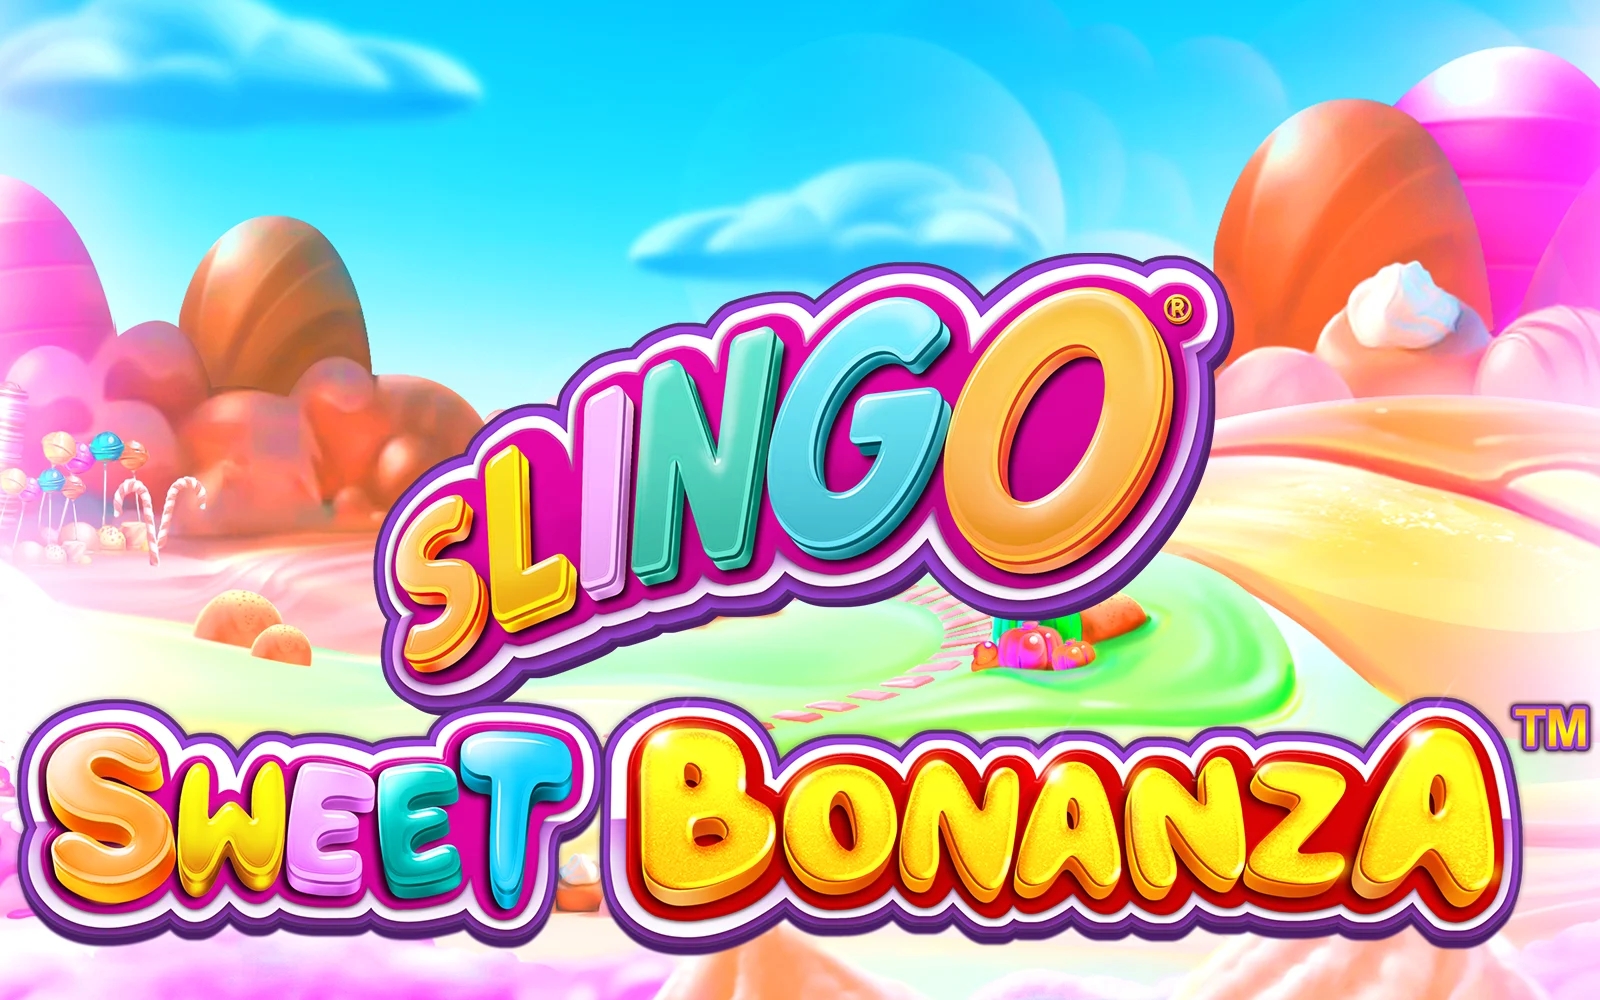 Joacă Slingo Sweet Bonanza în cazinoul online Starcasino.be